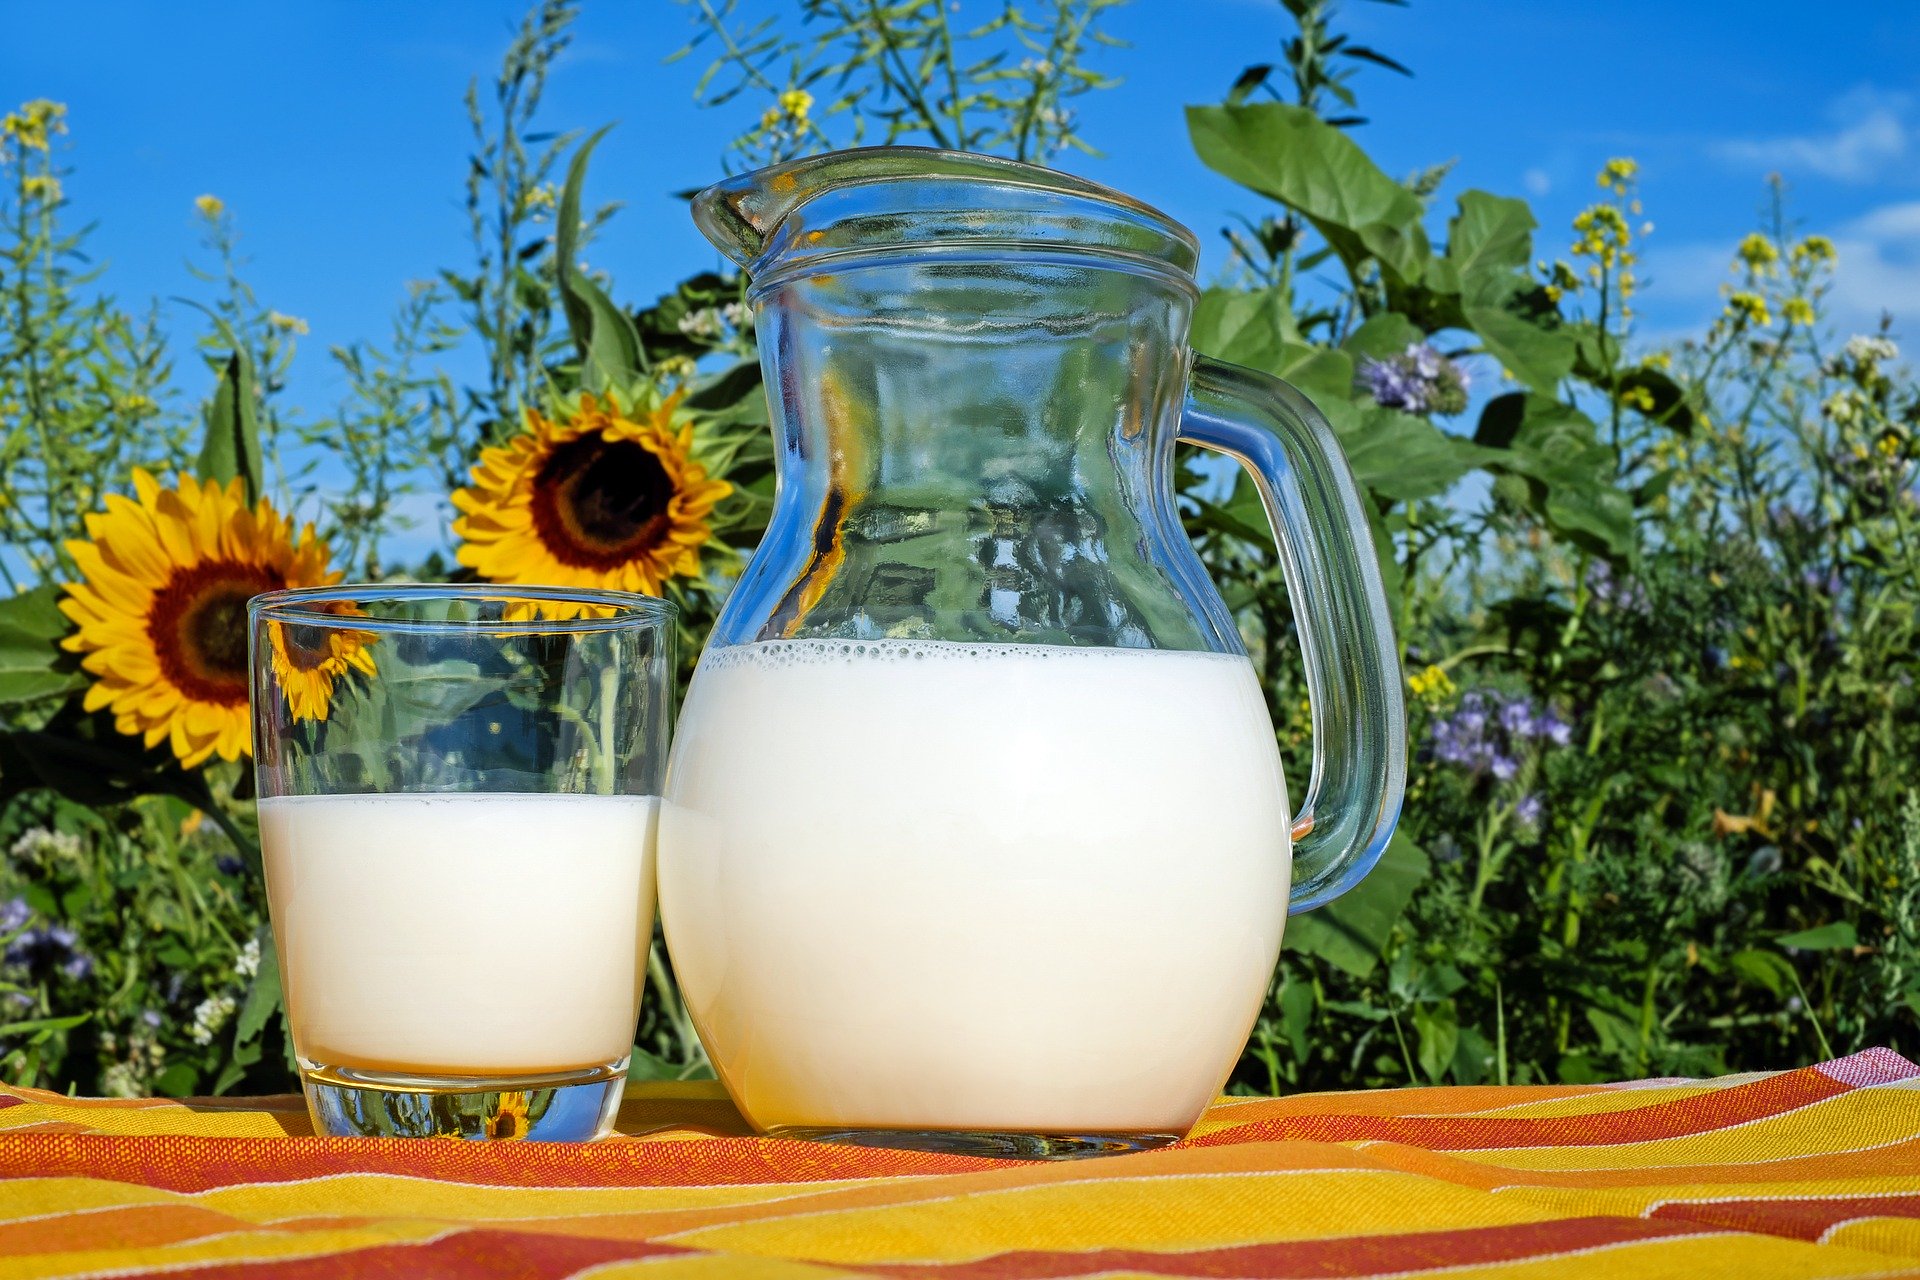 20 Health Benefits of Drinking Milk